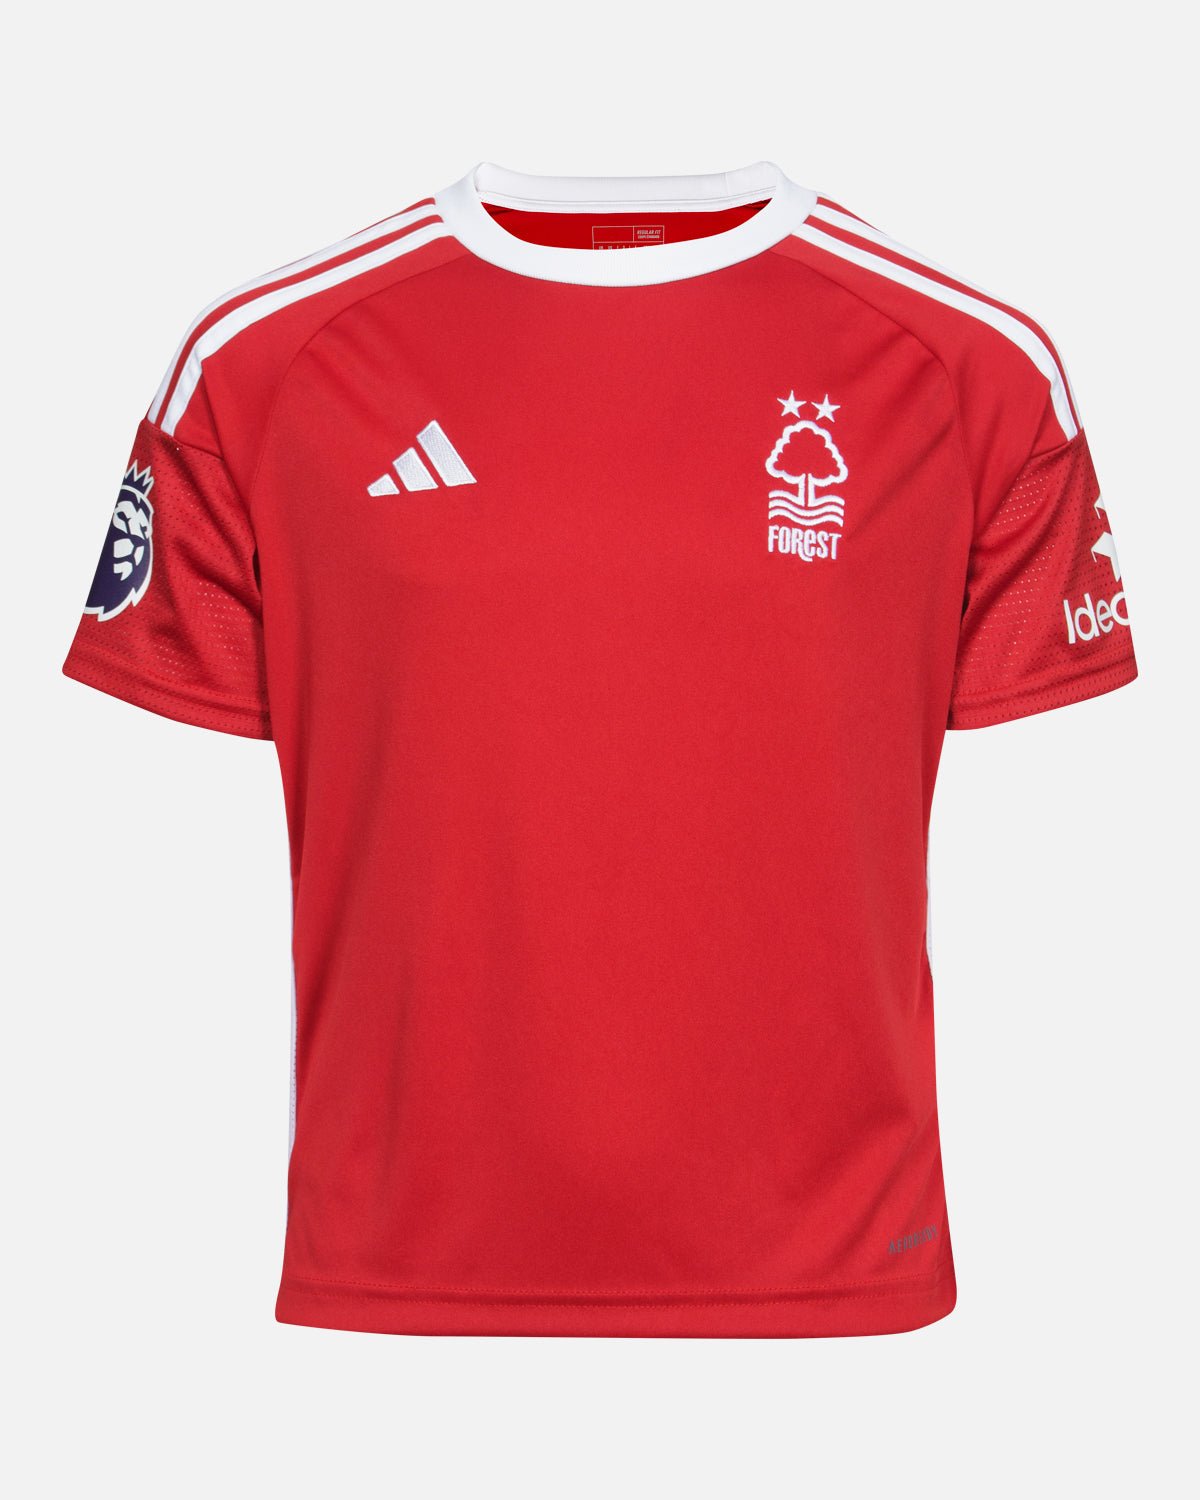 NFFC Junior Home Shirt 23-24 - Dominguez 16 - Nottingham Forest FC